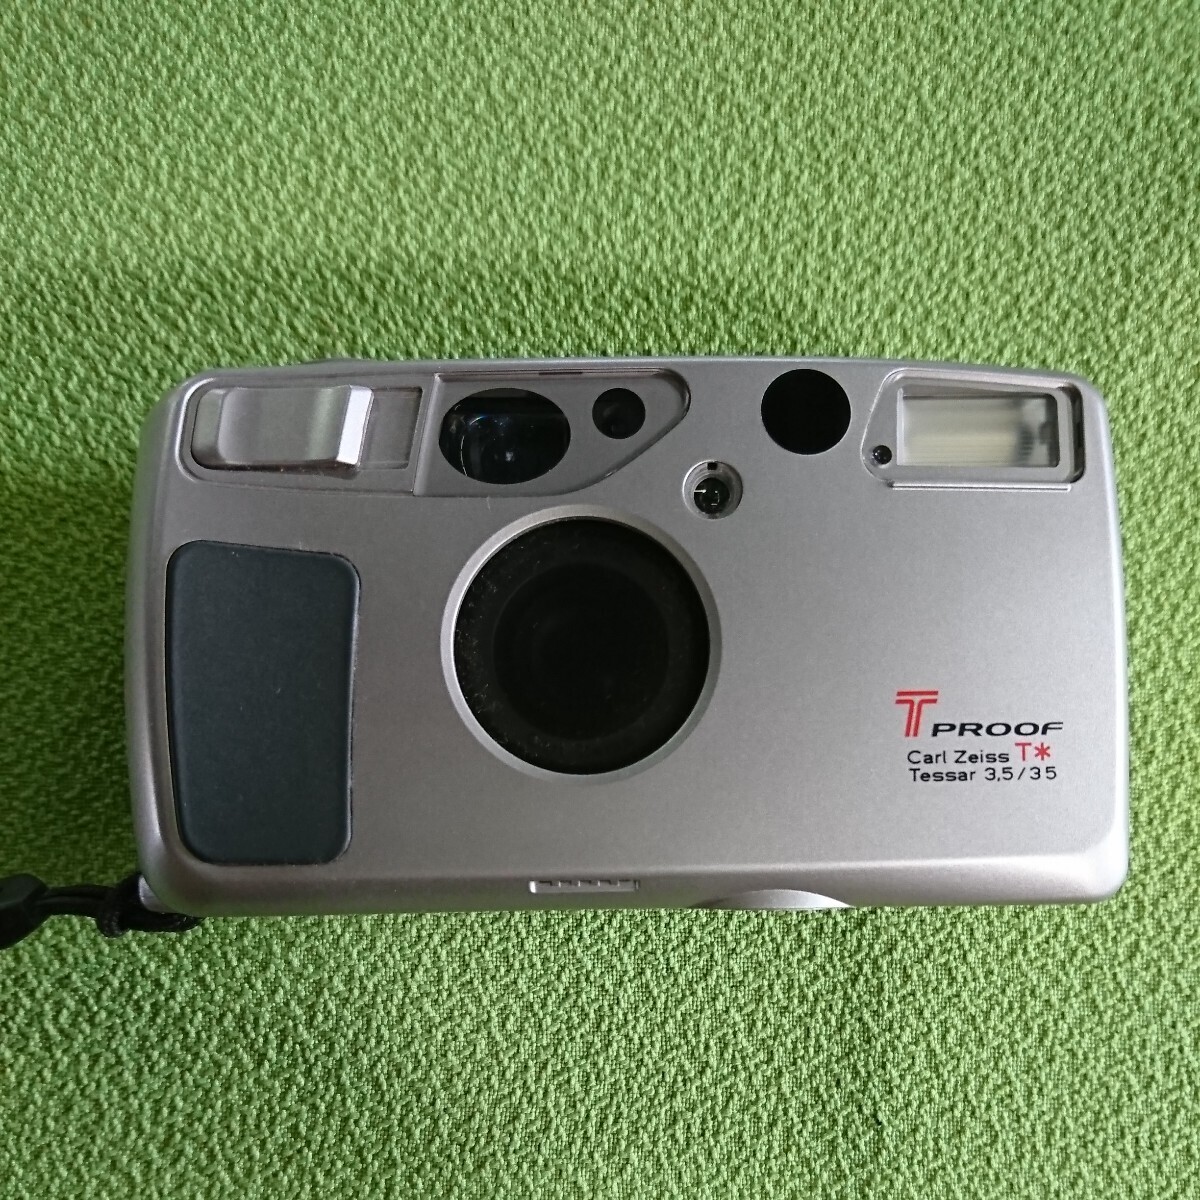 KYOCERA T PROOF Carl Zeiss Tessar 3.5 フイルムカメラ 現状販売品 ジャンク品の画像1